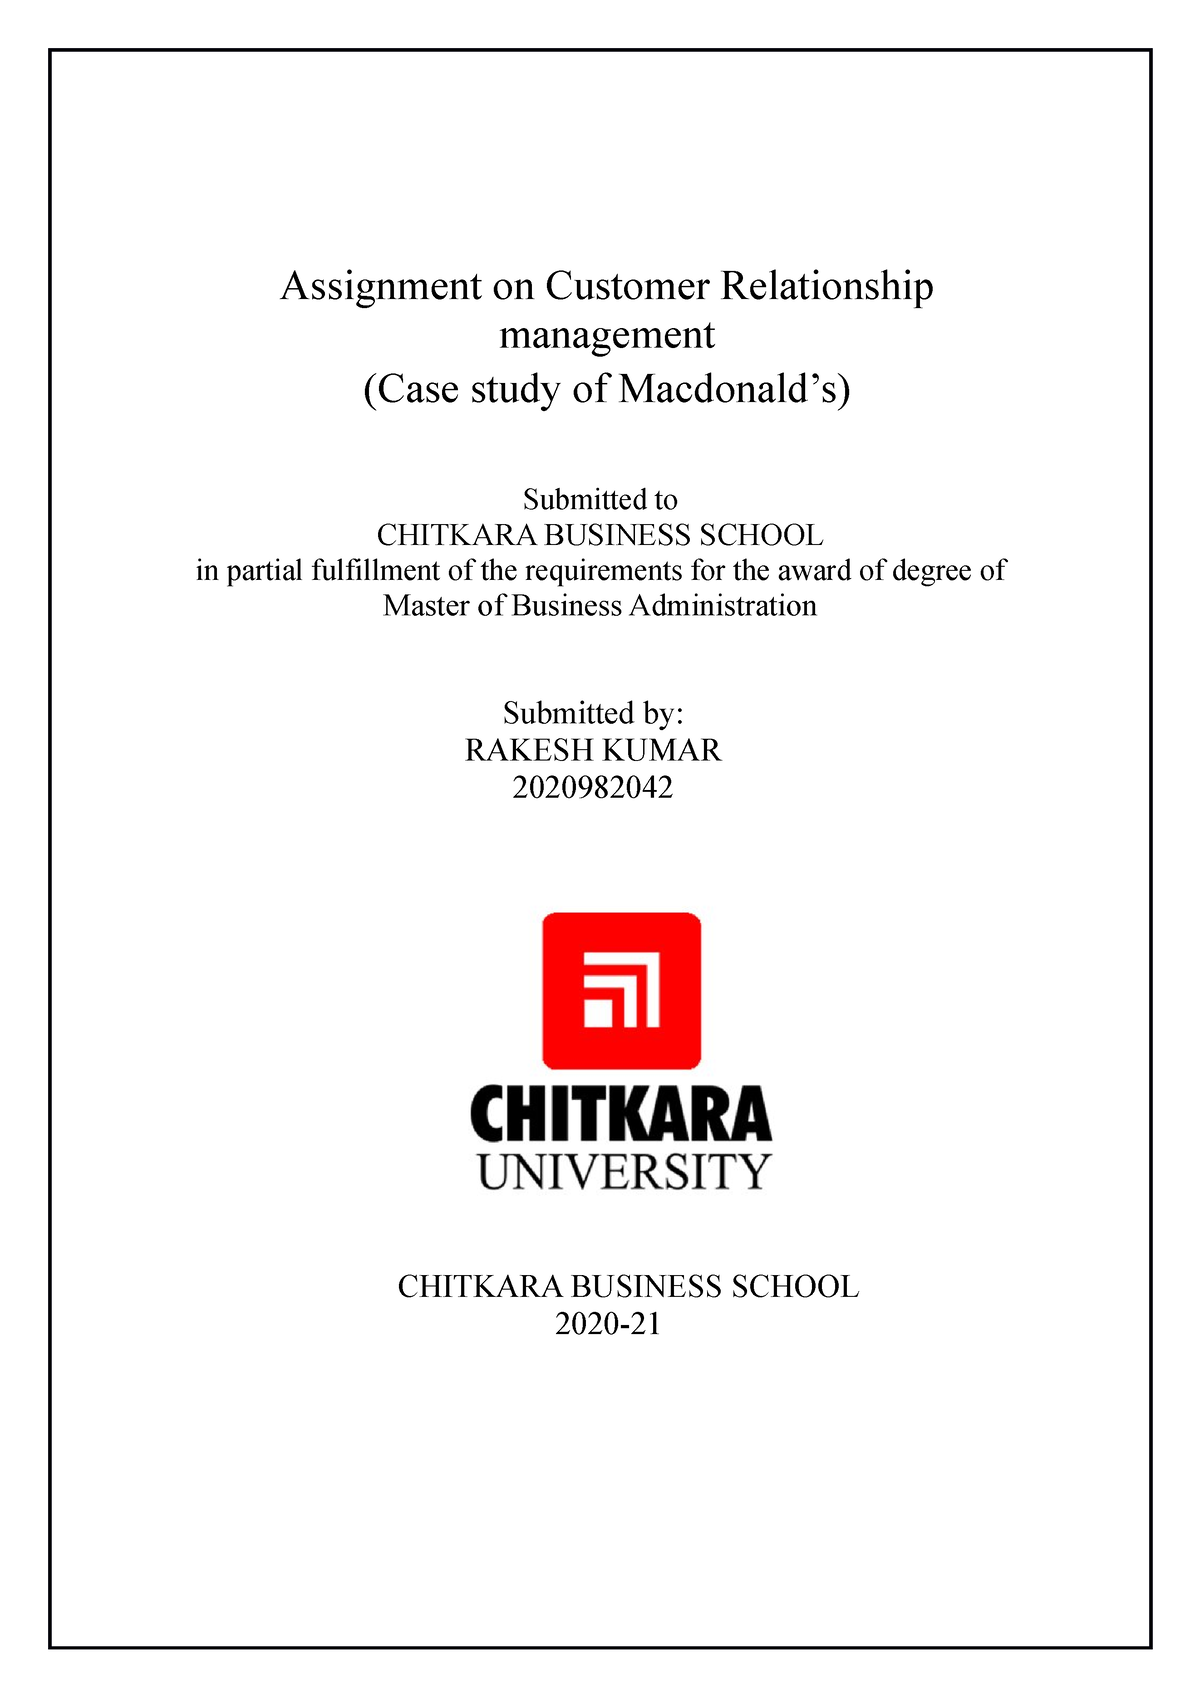 customer relationship management assignment sample